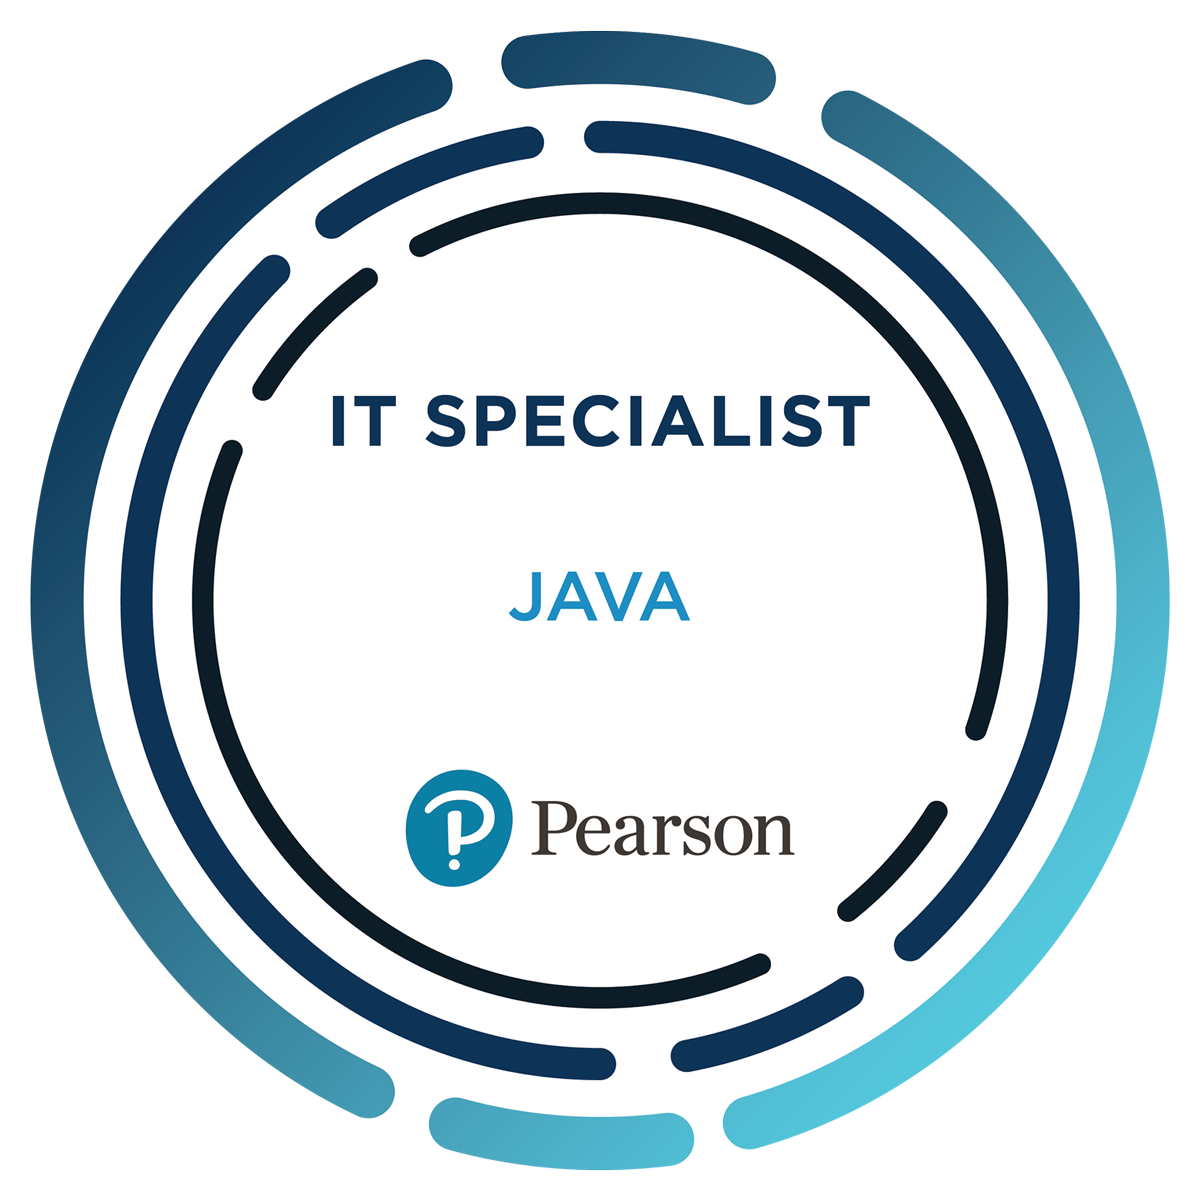 IT Specialist - Java